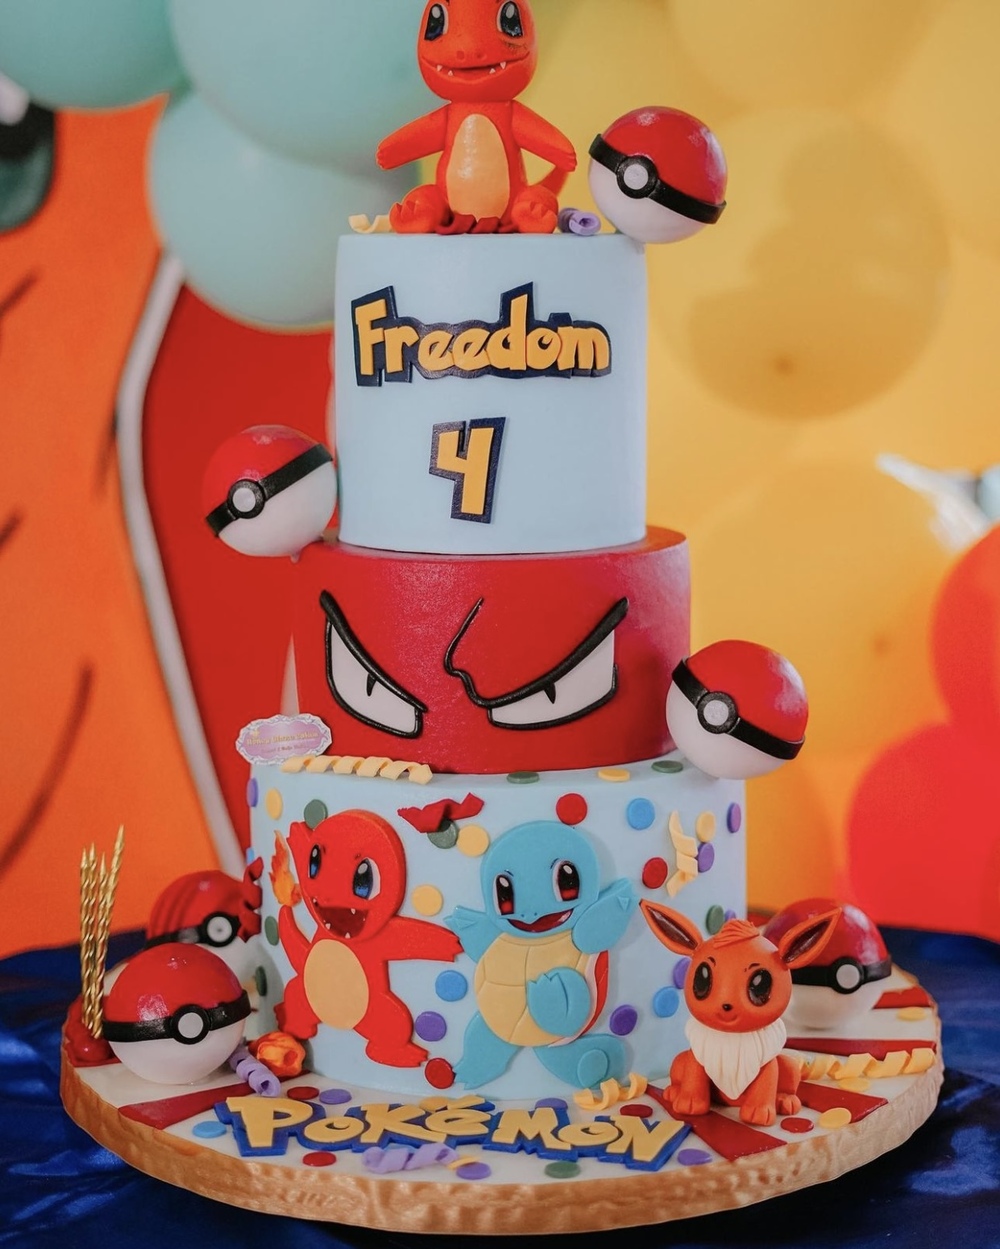 Freedom Prats' 4th birthday cake